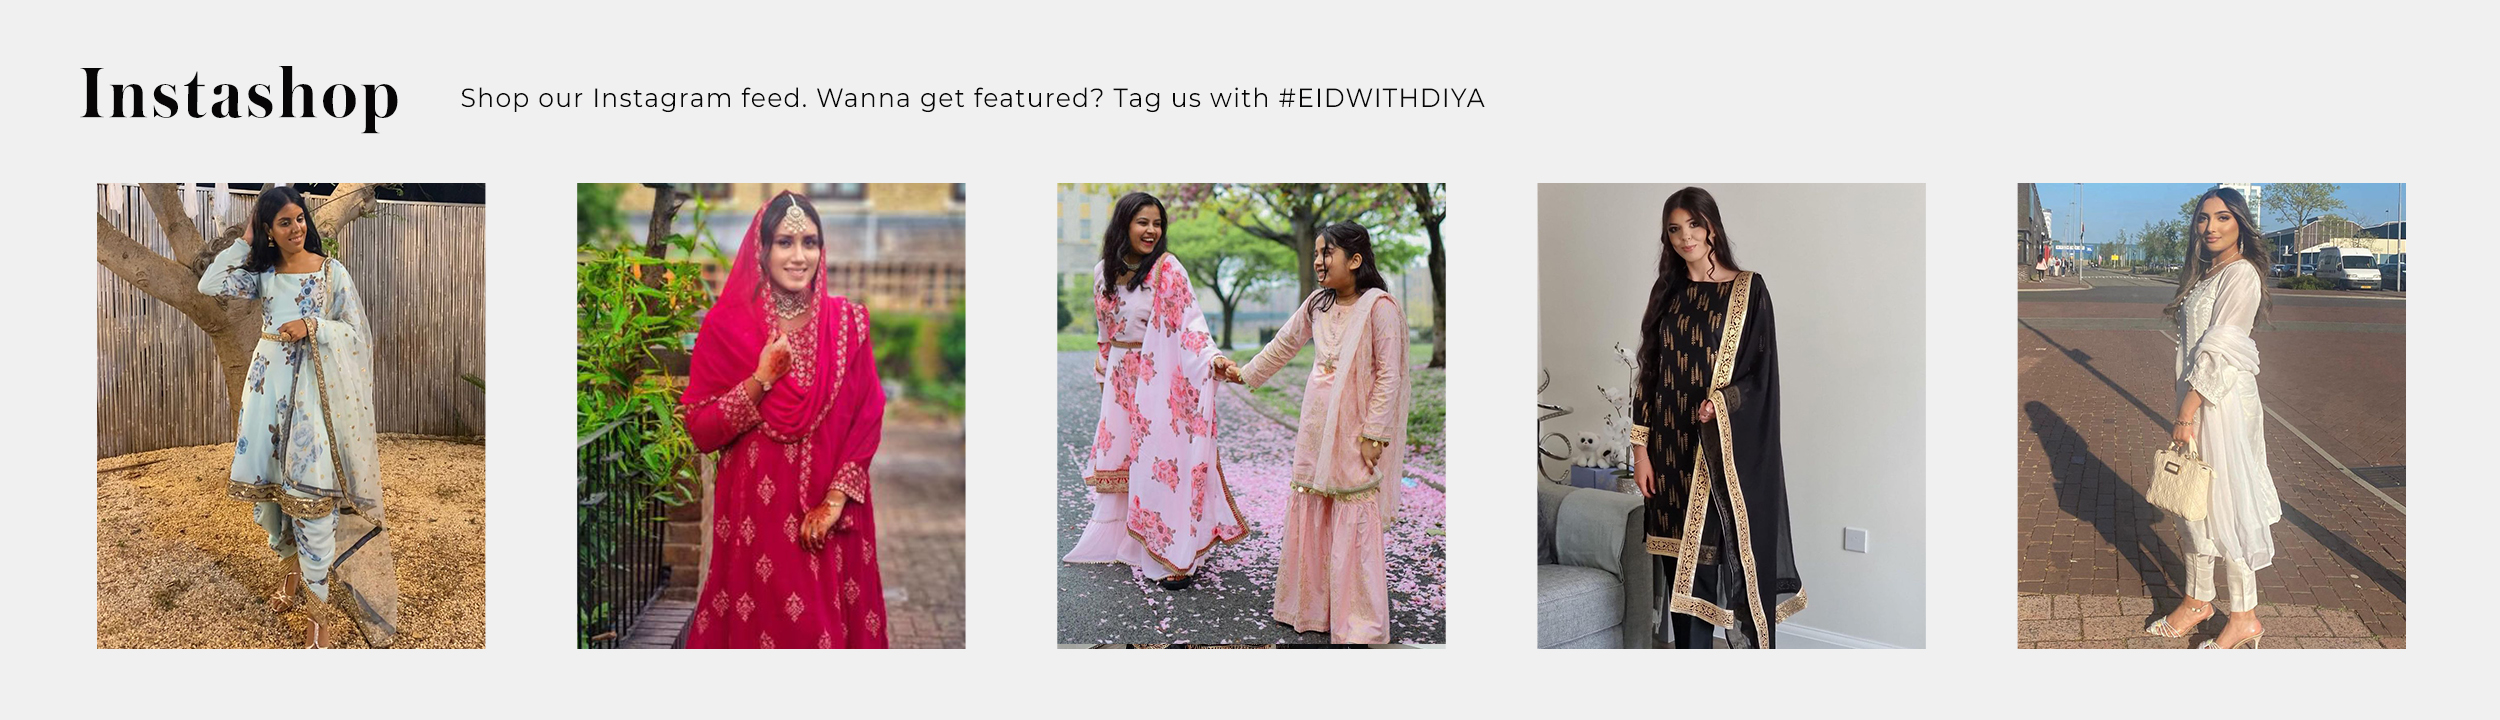 Indian And Pakistani Outfits Inspirations on Instagram - iweardiya